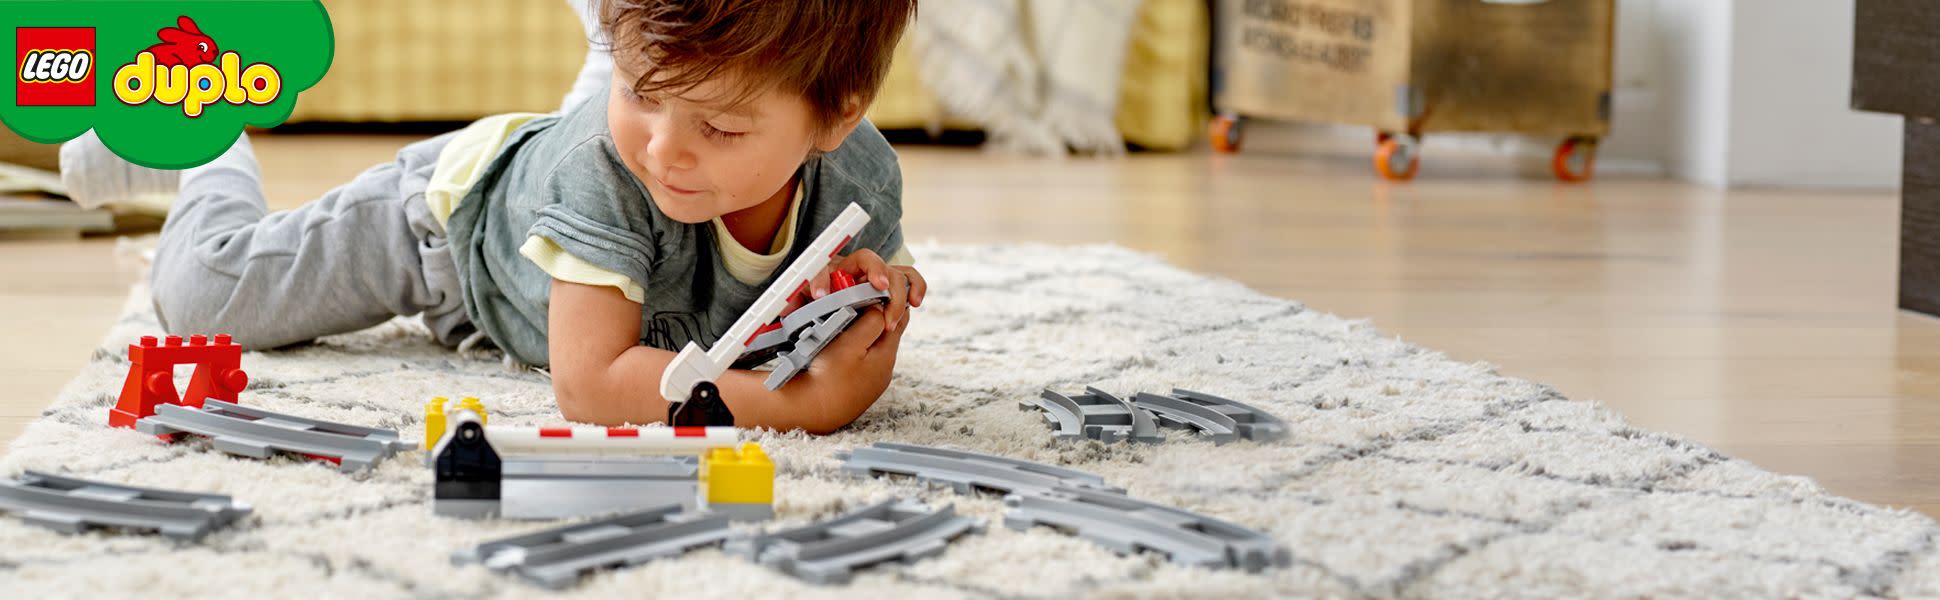 LEGO DUPLO: Train Tracks - Kremer's Toy And Hobby